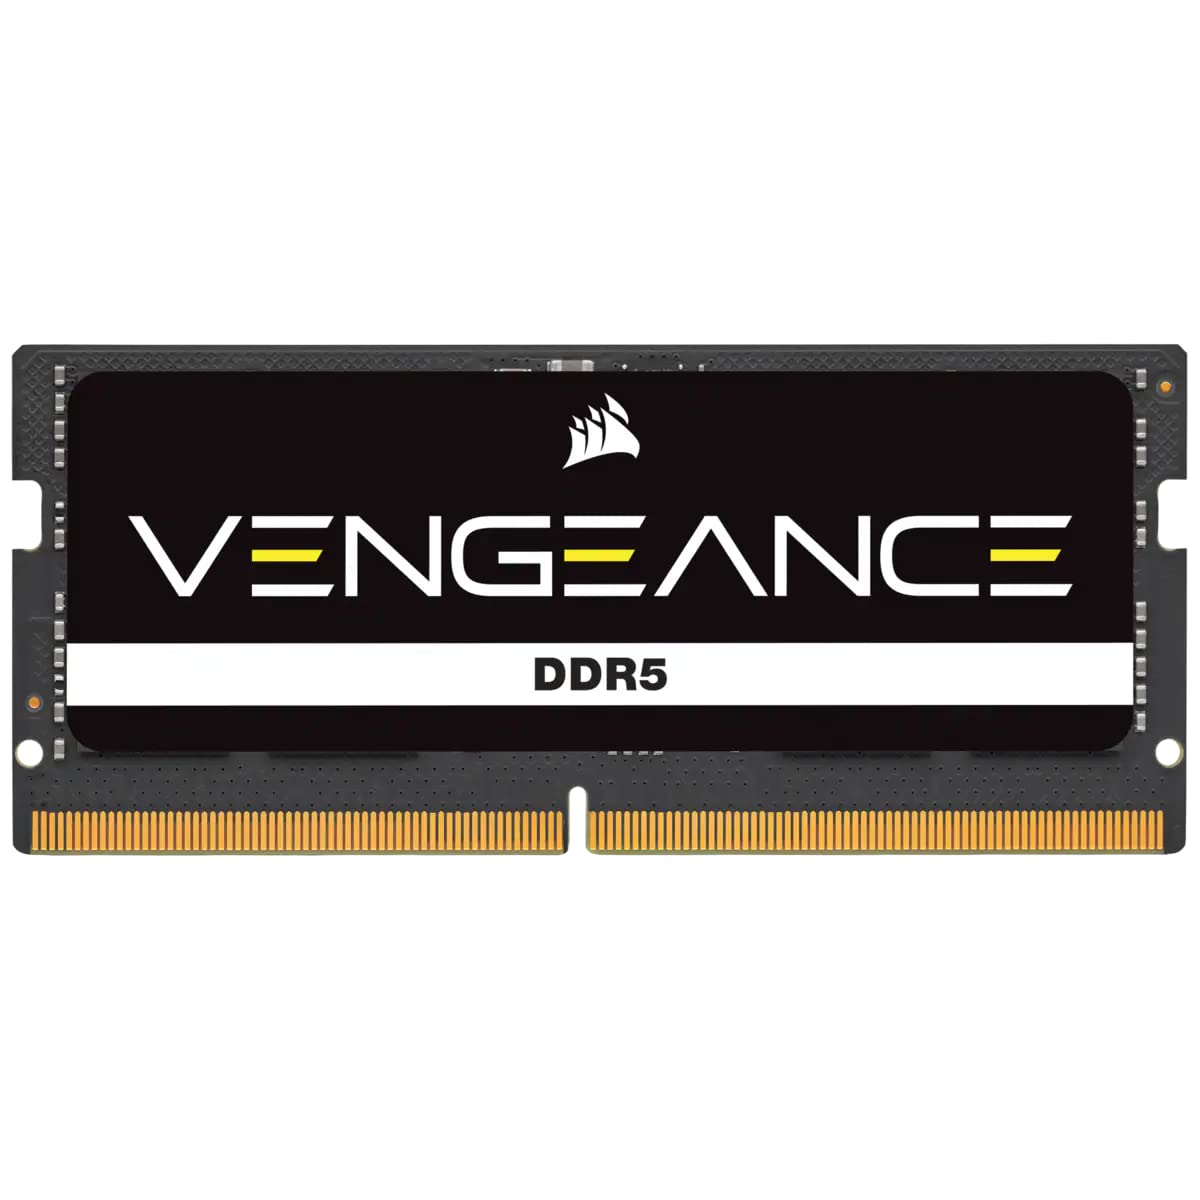 Vengeance 16GB DDR5 SD